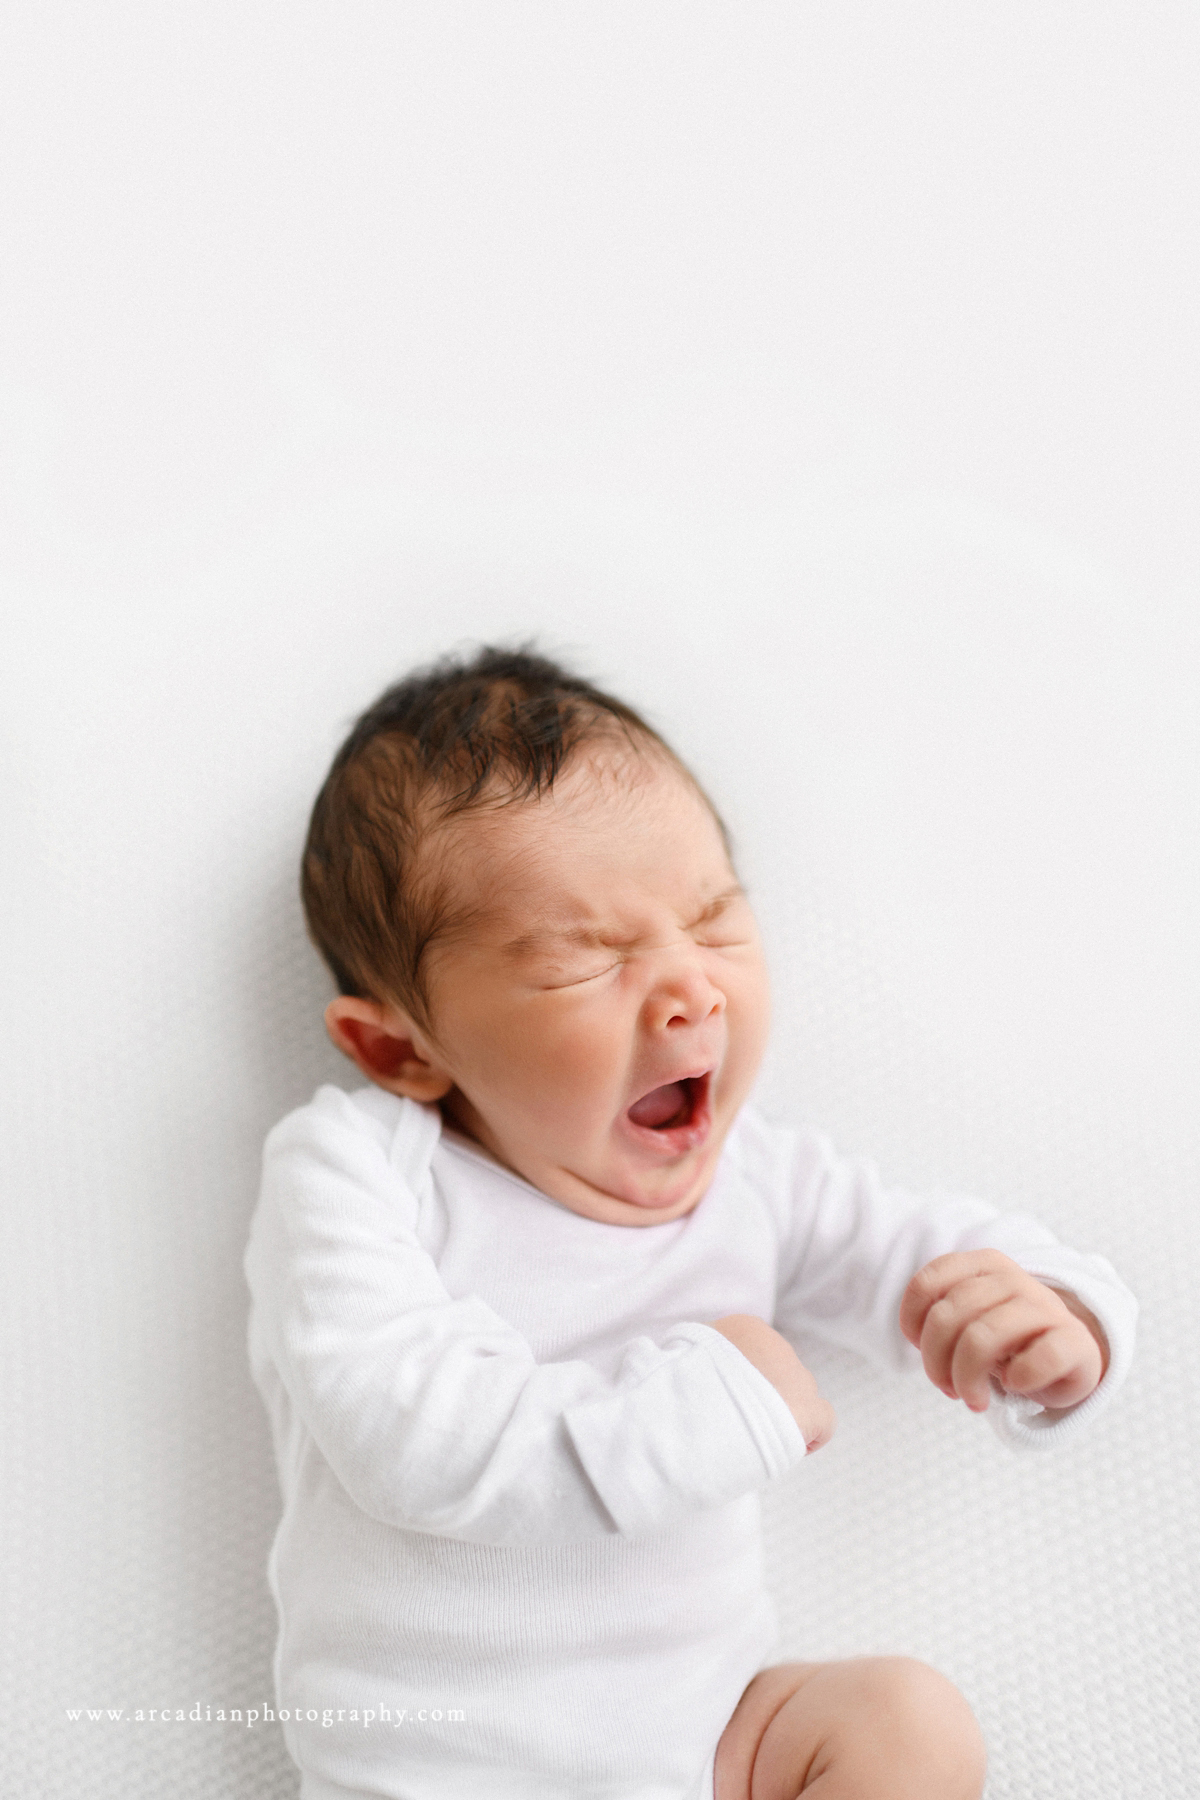 A big newborn yawn! Learn more about booking newborn photos.